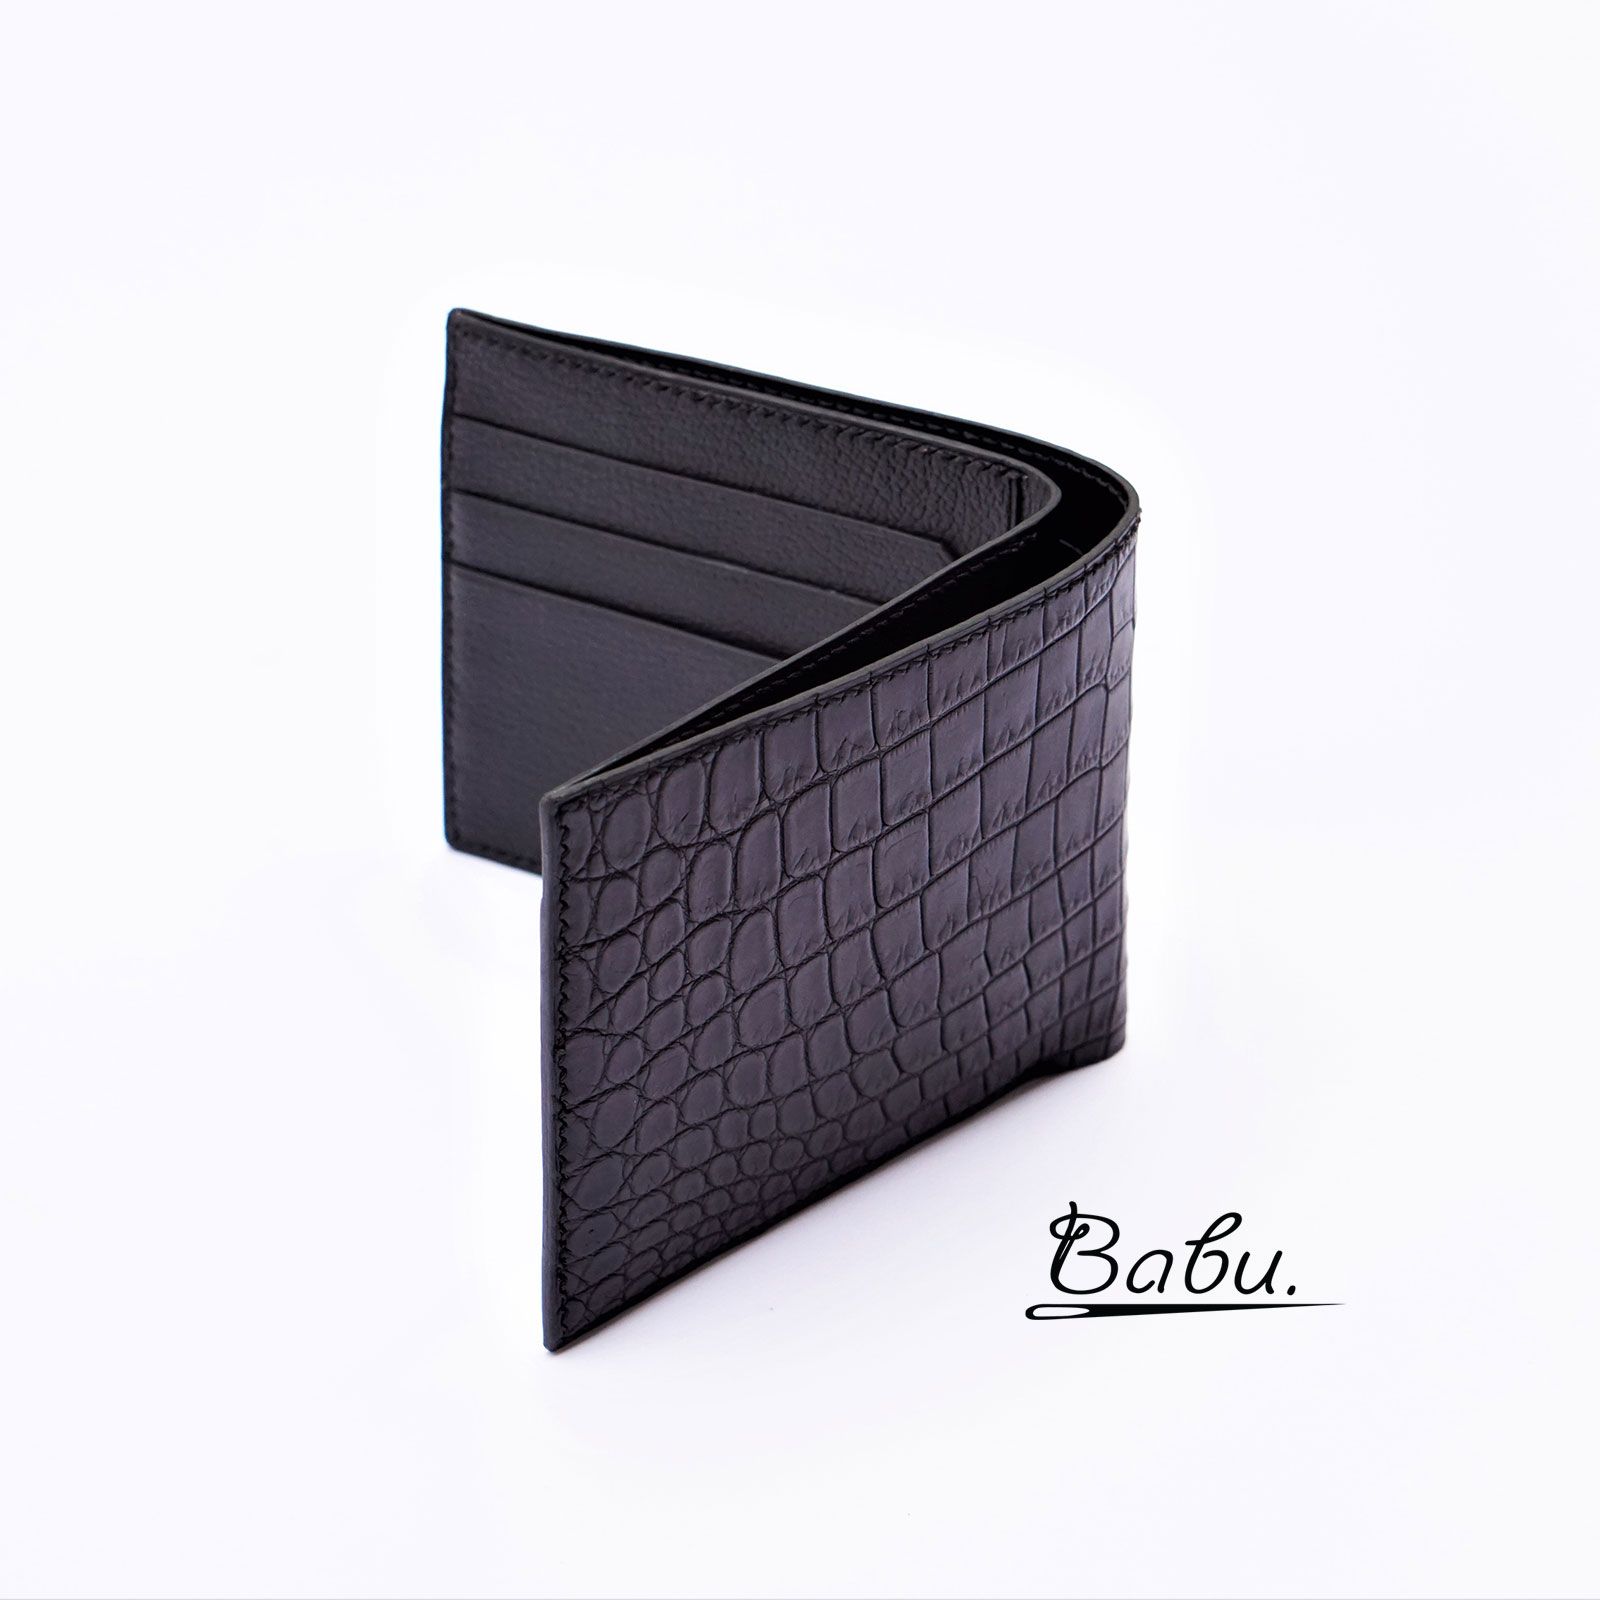 Premium Epi leather wallet, Navy Blue Calf leather wallet WL296